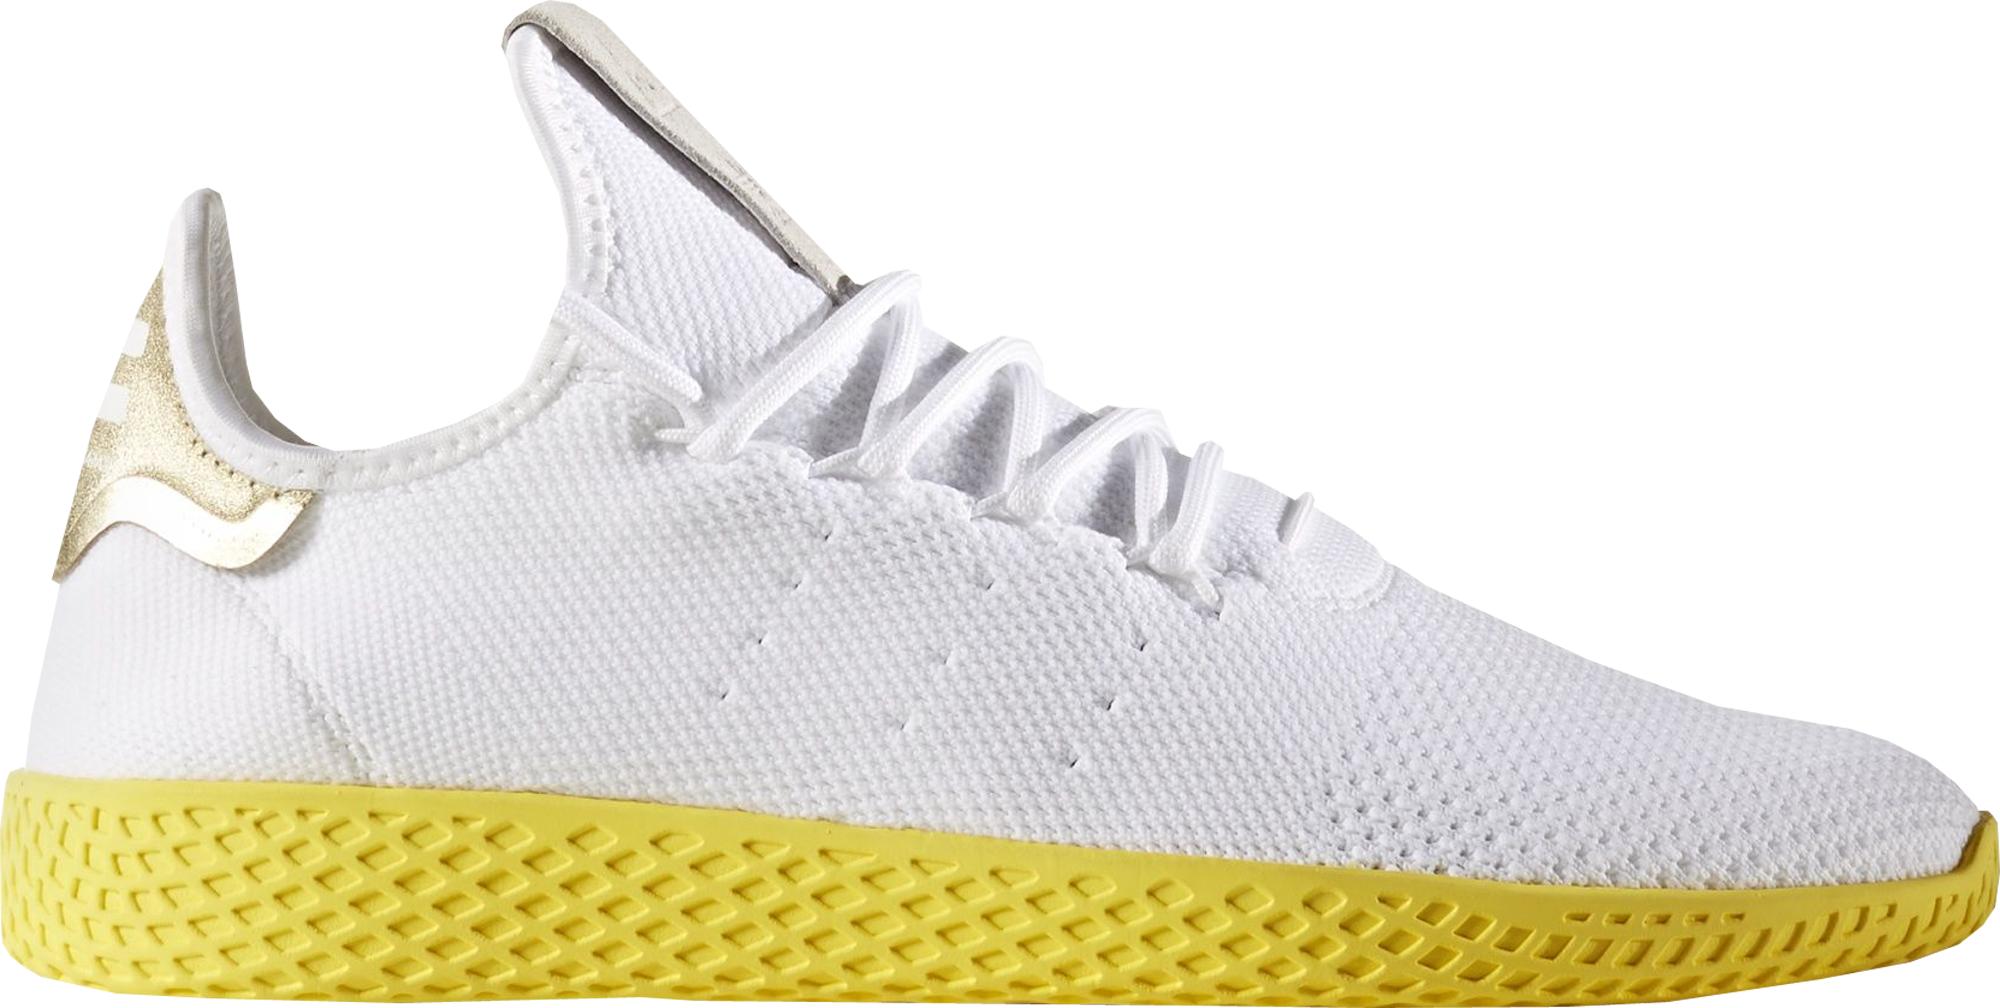 Pharrell Williams x adidas Tennis Hu White Yellow - StockX News